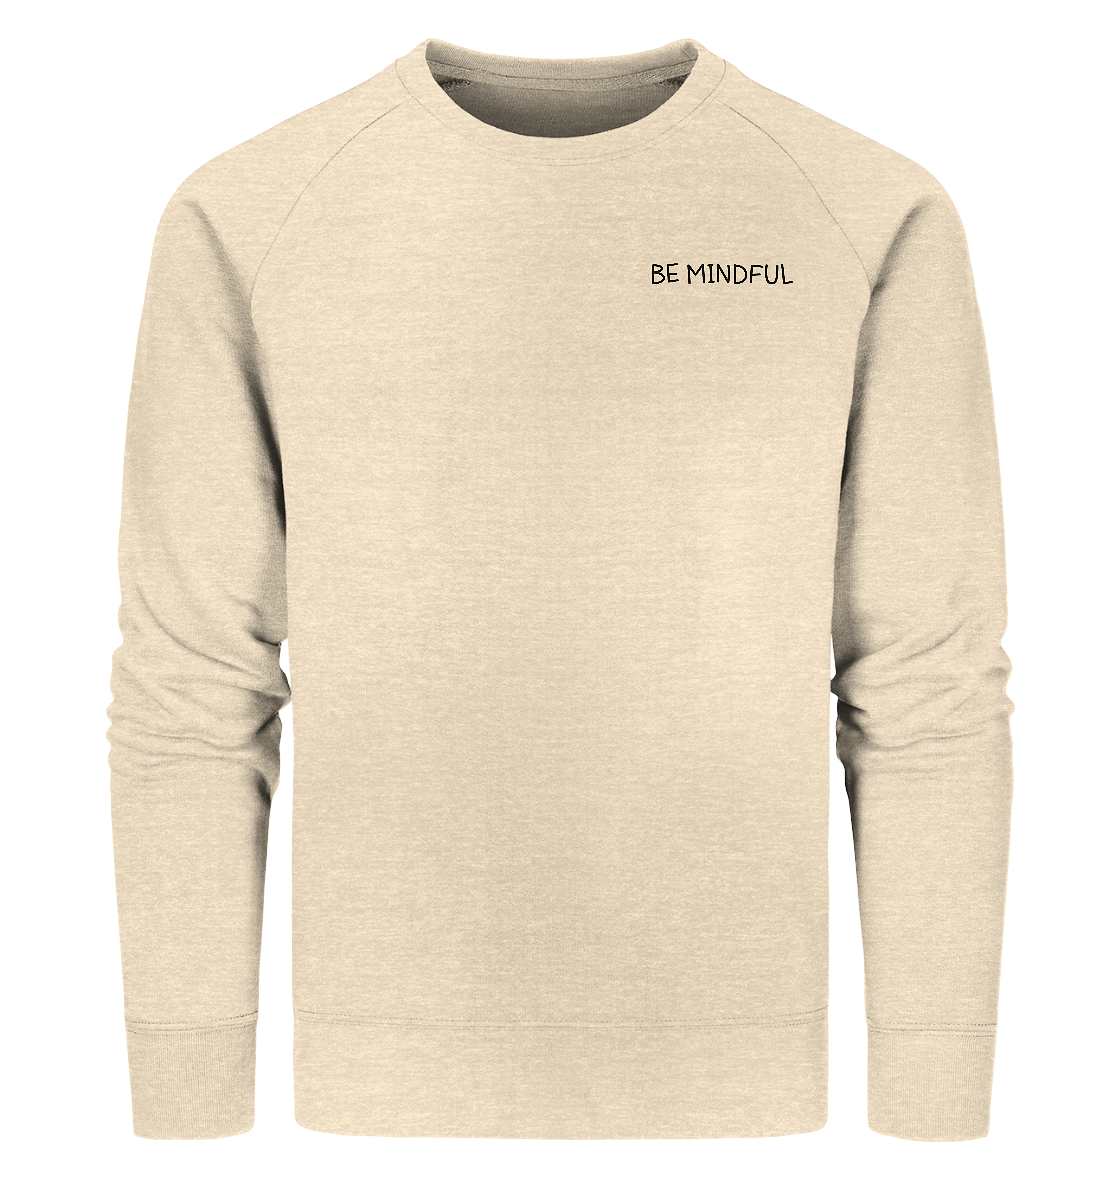 Be mindful - Organic Sweatshirt